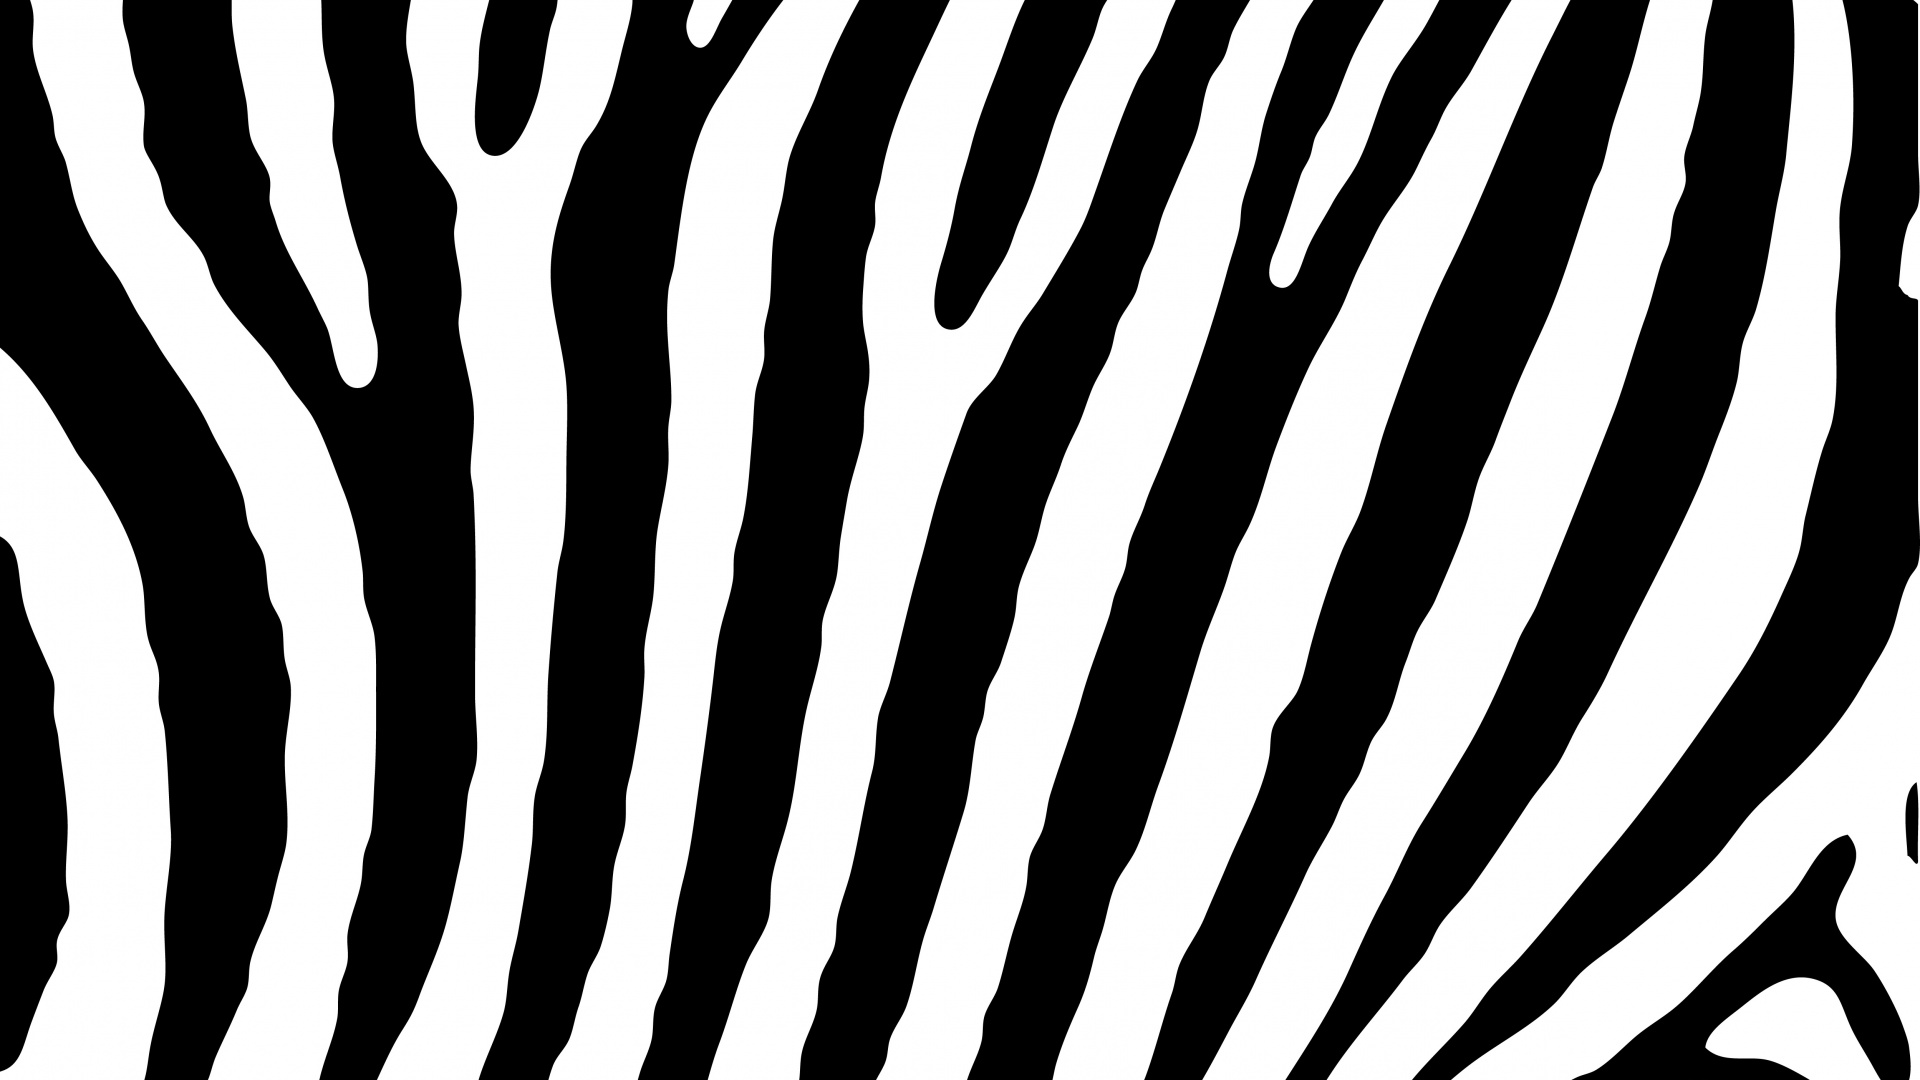 Download wallpaper 1920x1080 animal wildlife portrait zebra full hd  hdtv fhd 1080p wallpaper 1920x1080 hd background 3431